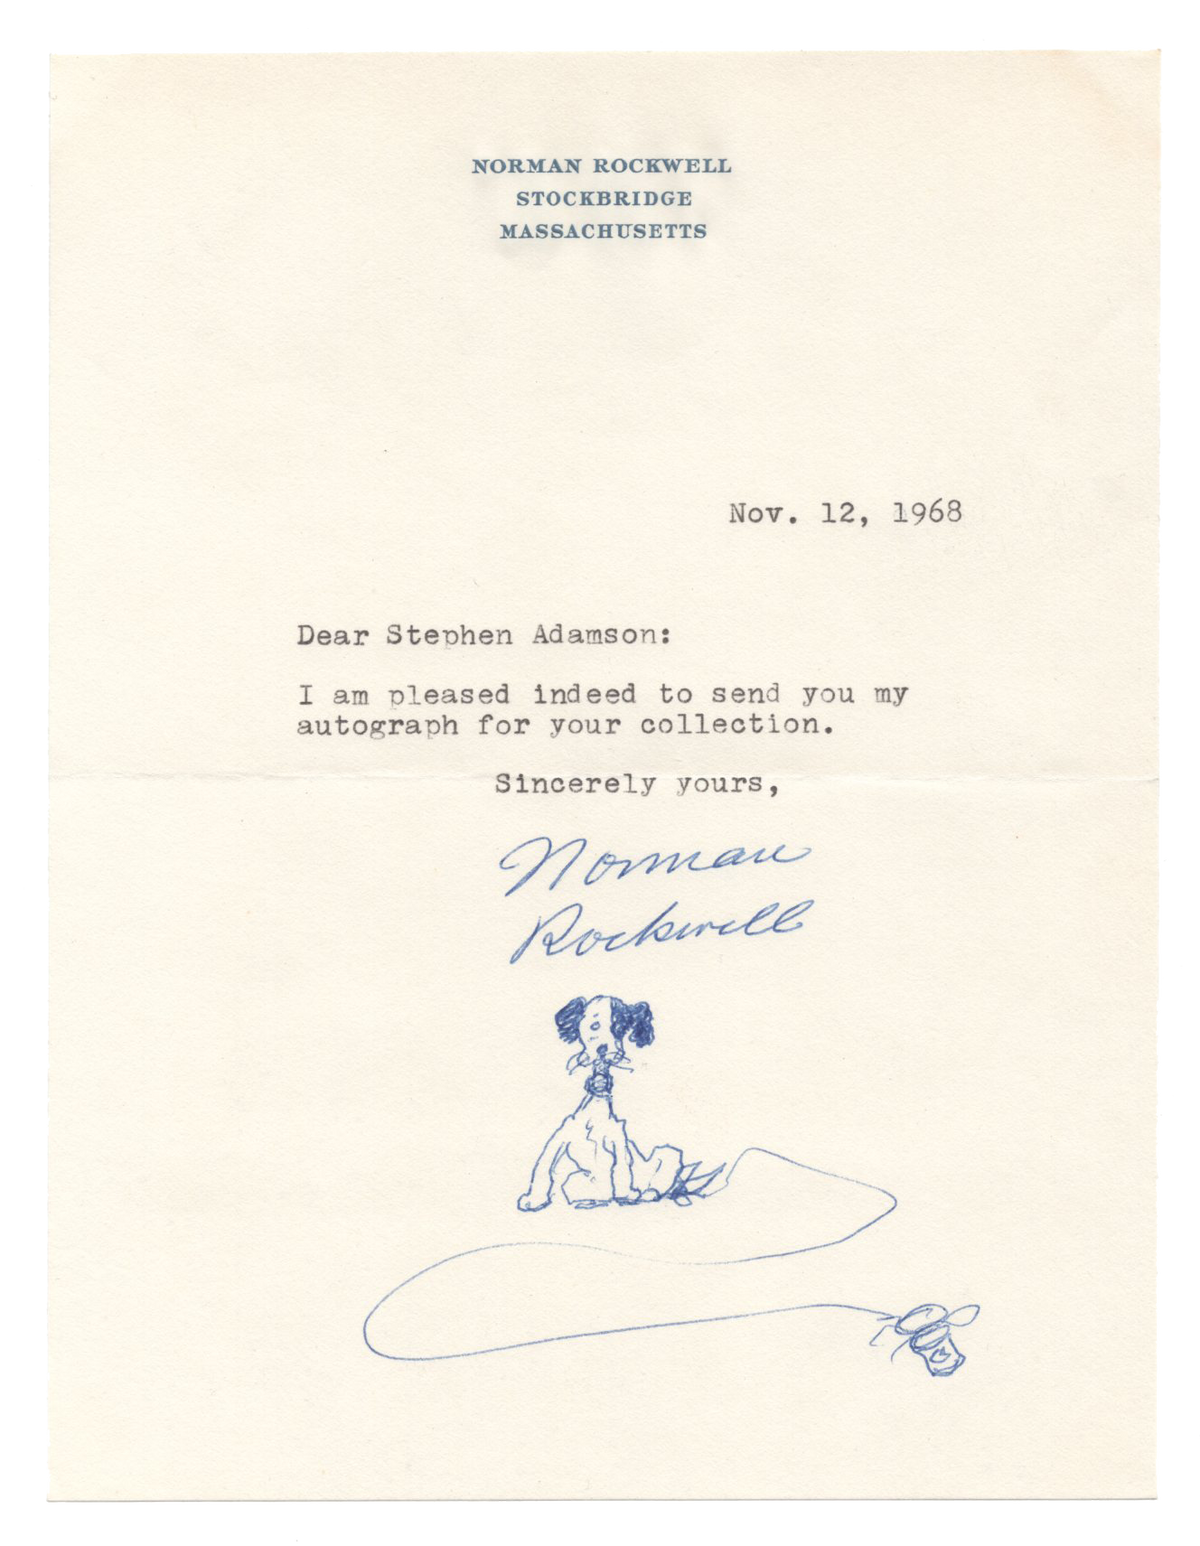 Norman Rockwell - Original Ink Drawing on Signed Letter (TLS), 1968